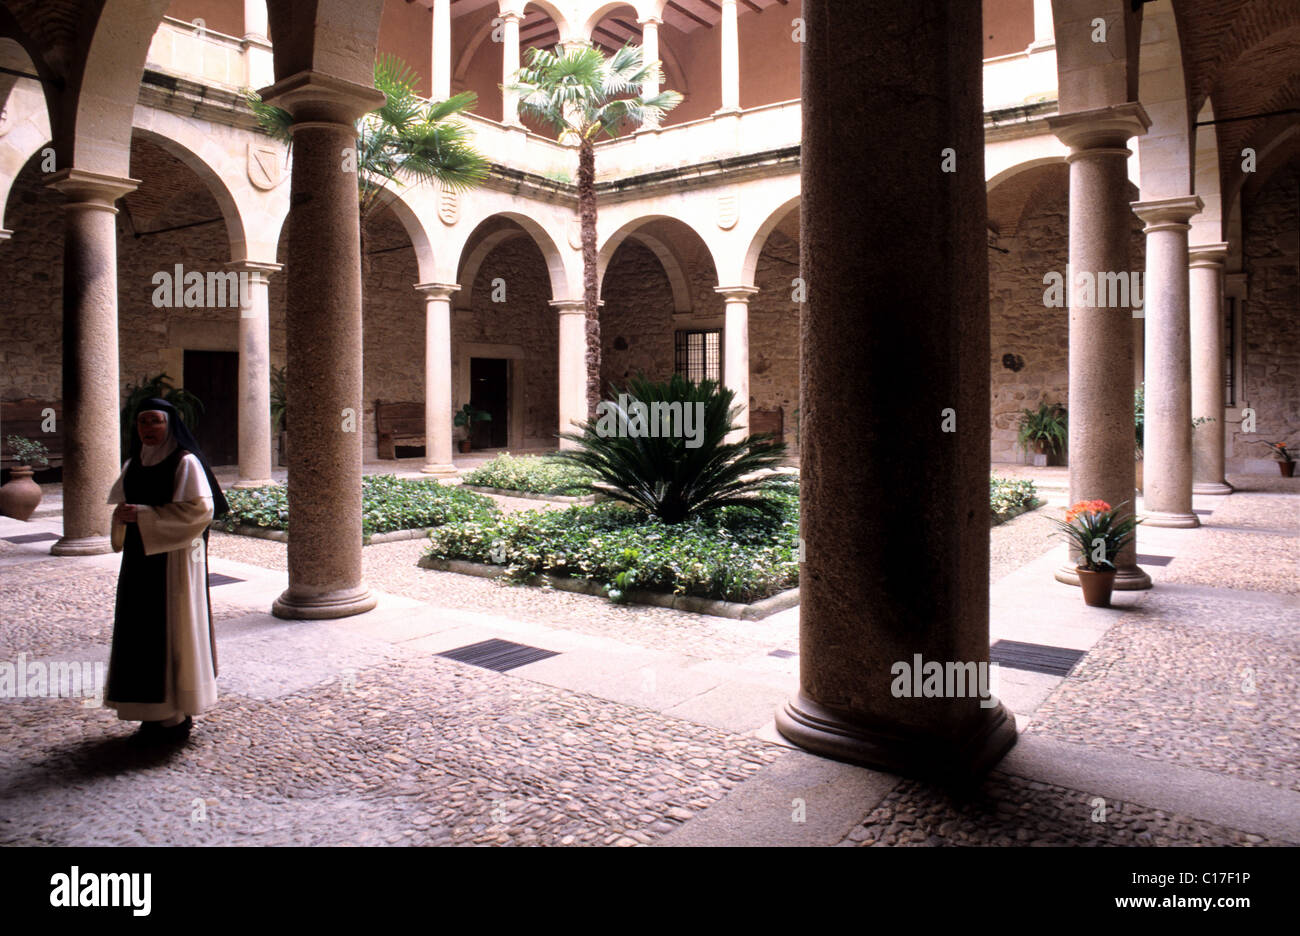 Spain, Estremadura, Trujillo, inside a palace Stock Photo